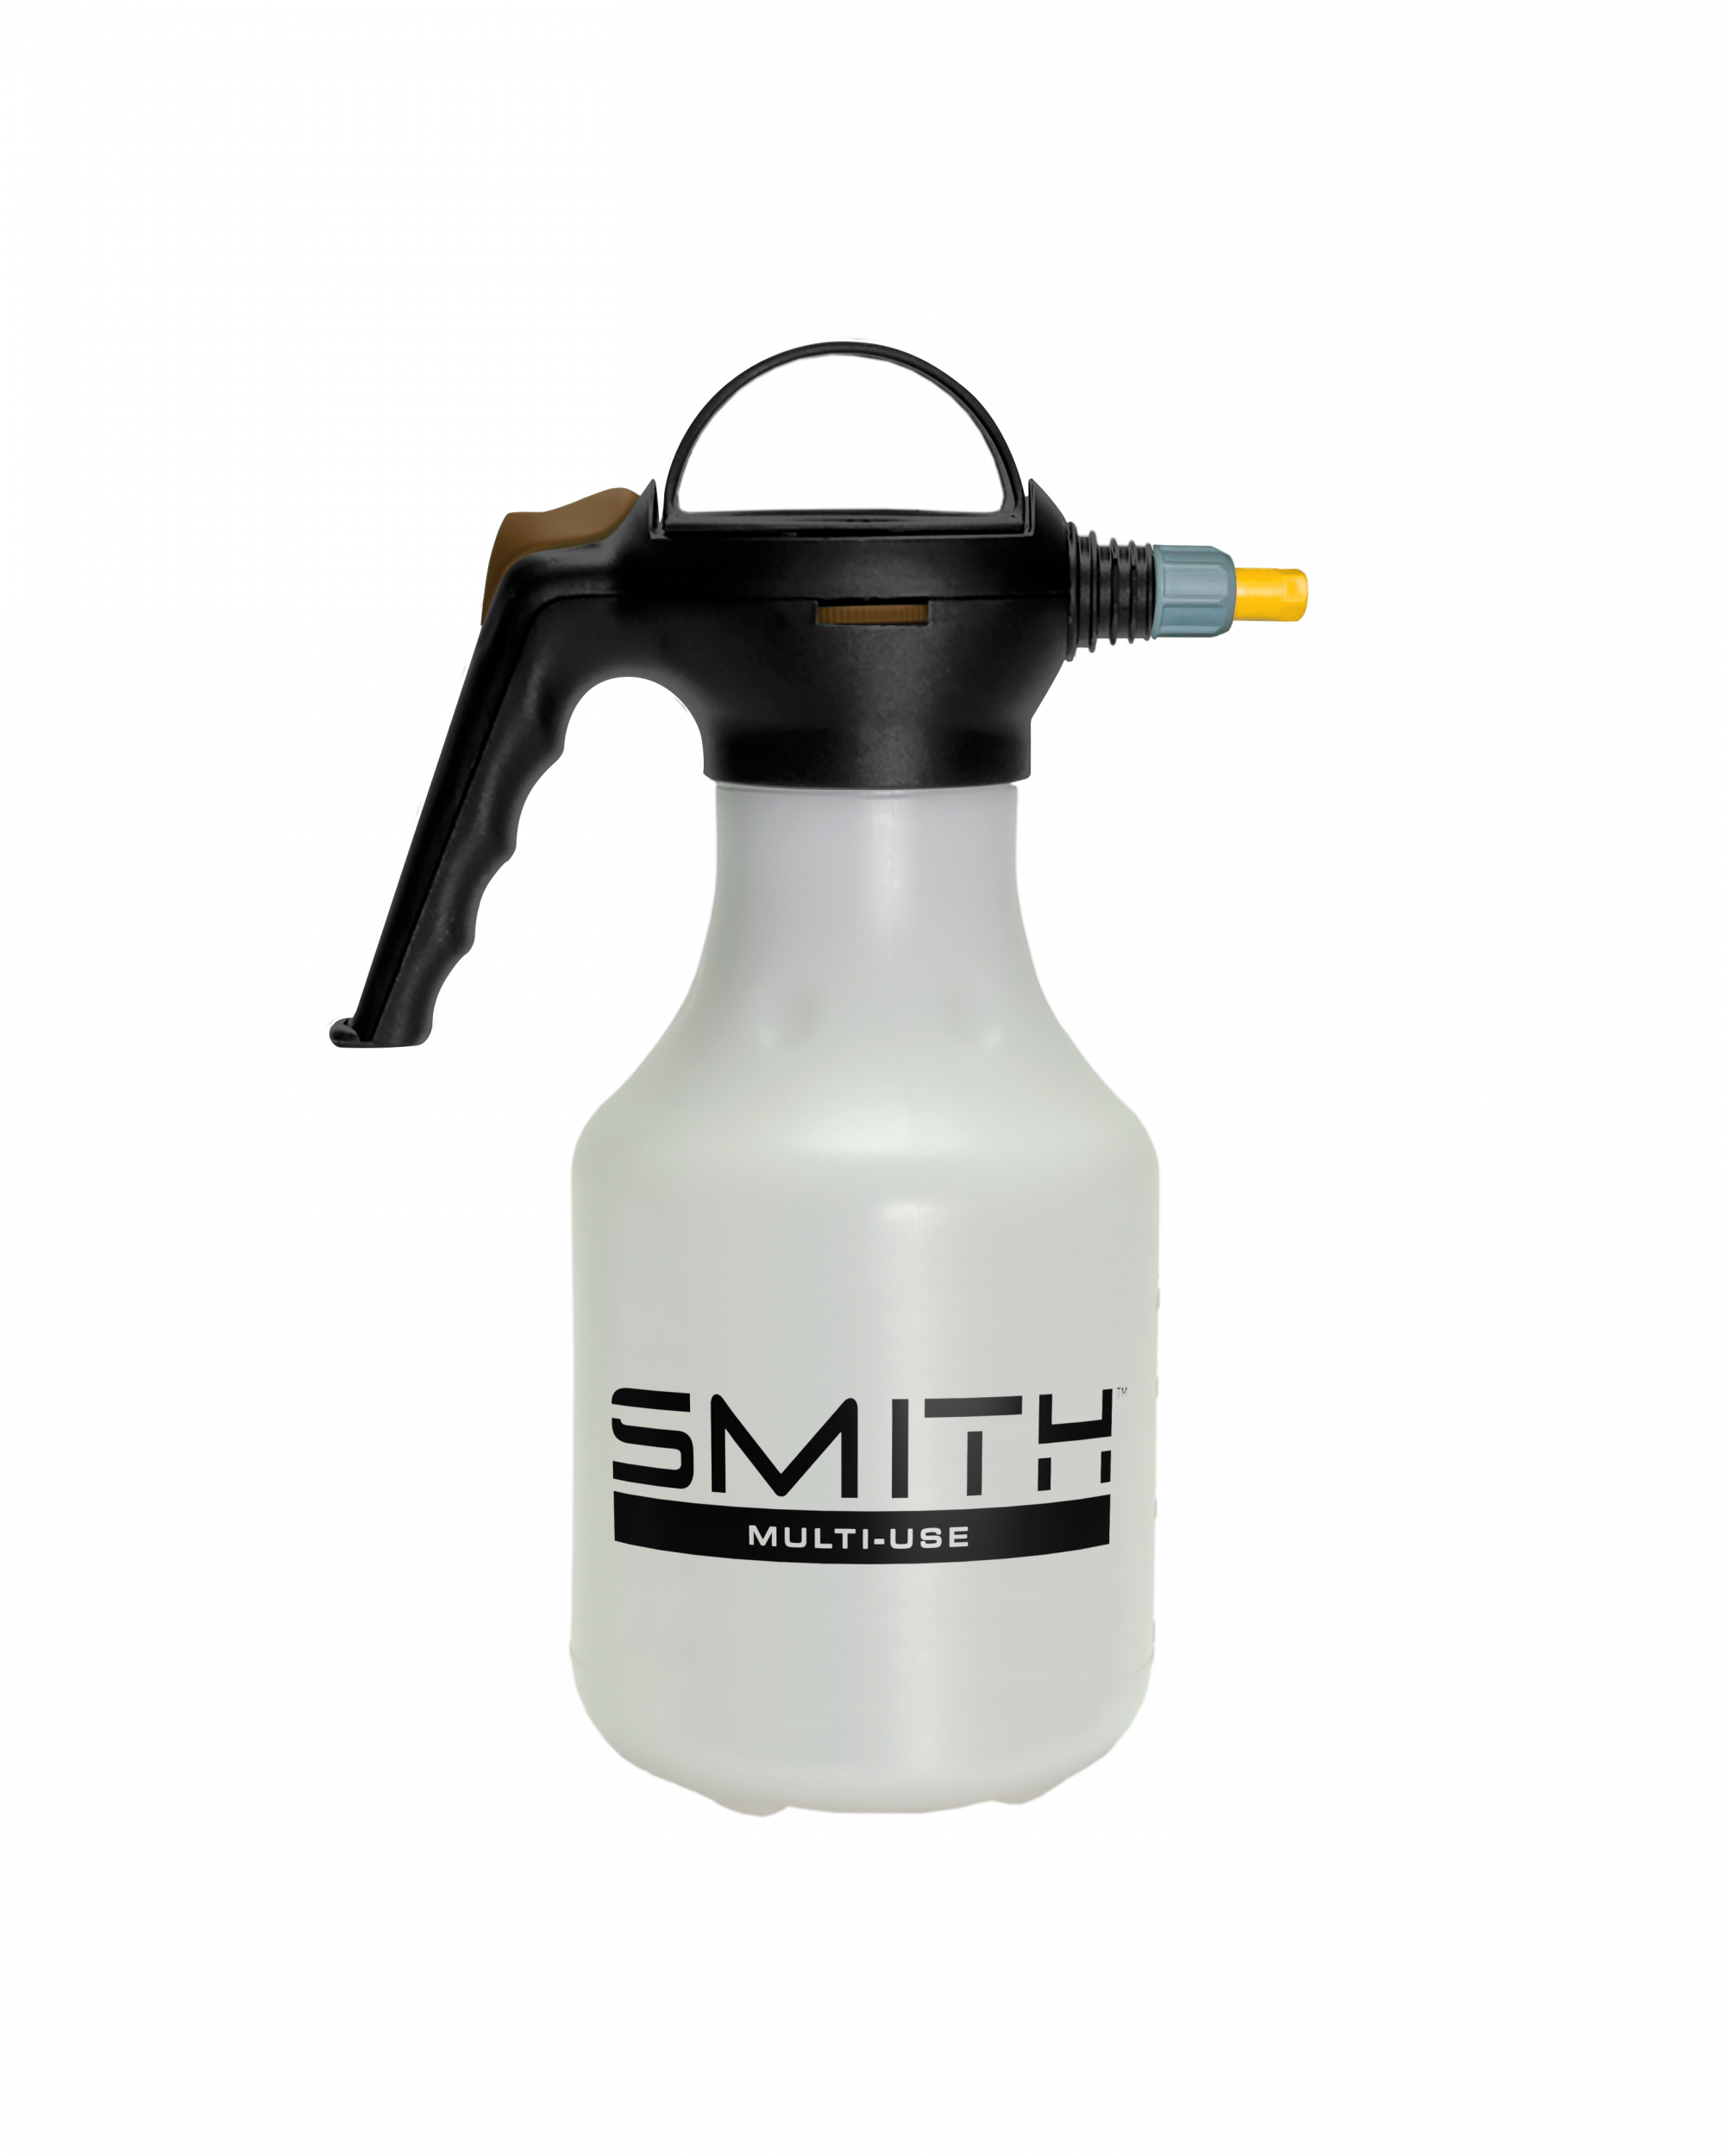 Smith Multi-Use 48 Oz. Sanitizing Mister, Model 190672